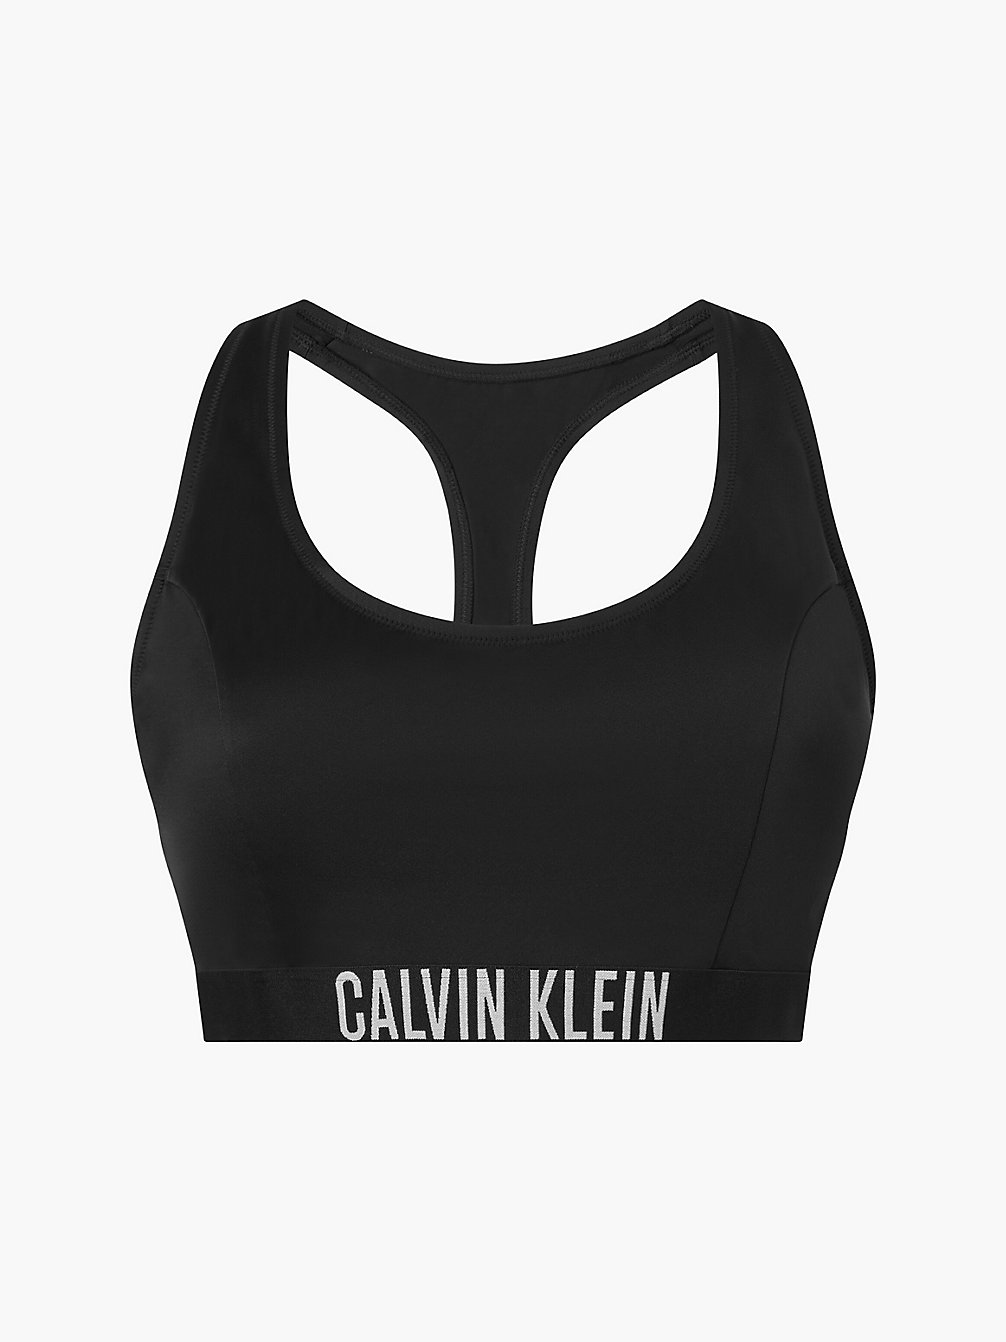 PVH BLACK > Bерх бикини-бралетт плюс-сайз - Intense Power > undefined Женщины - Calvin Klein